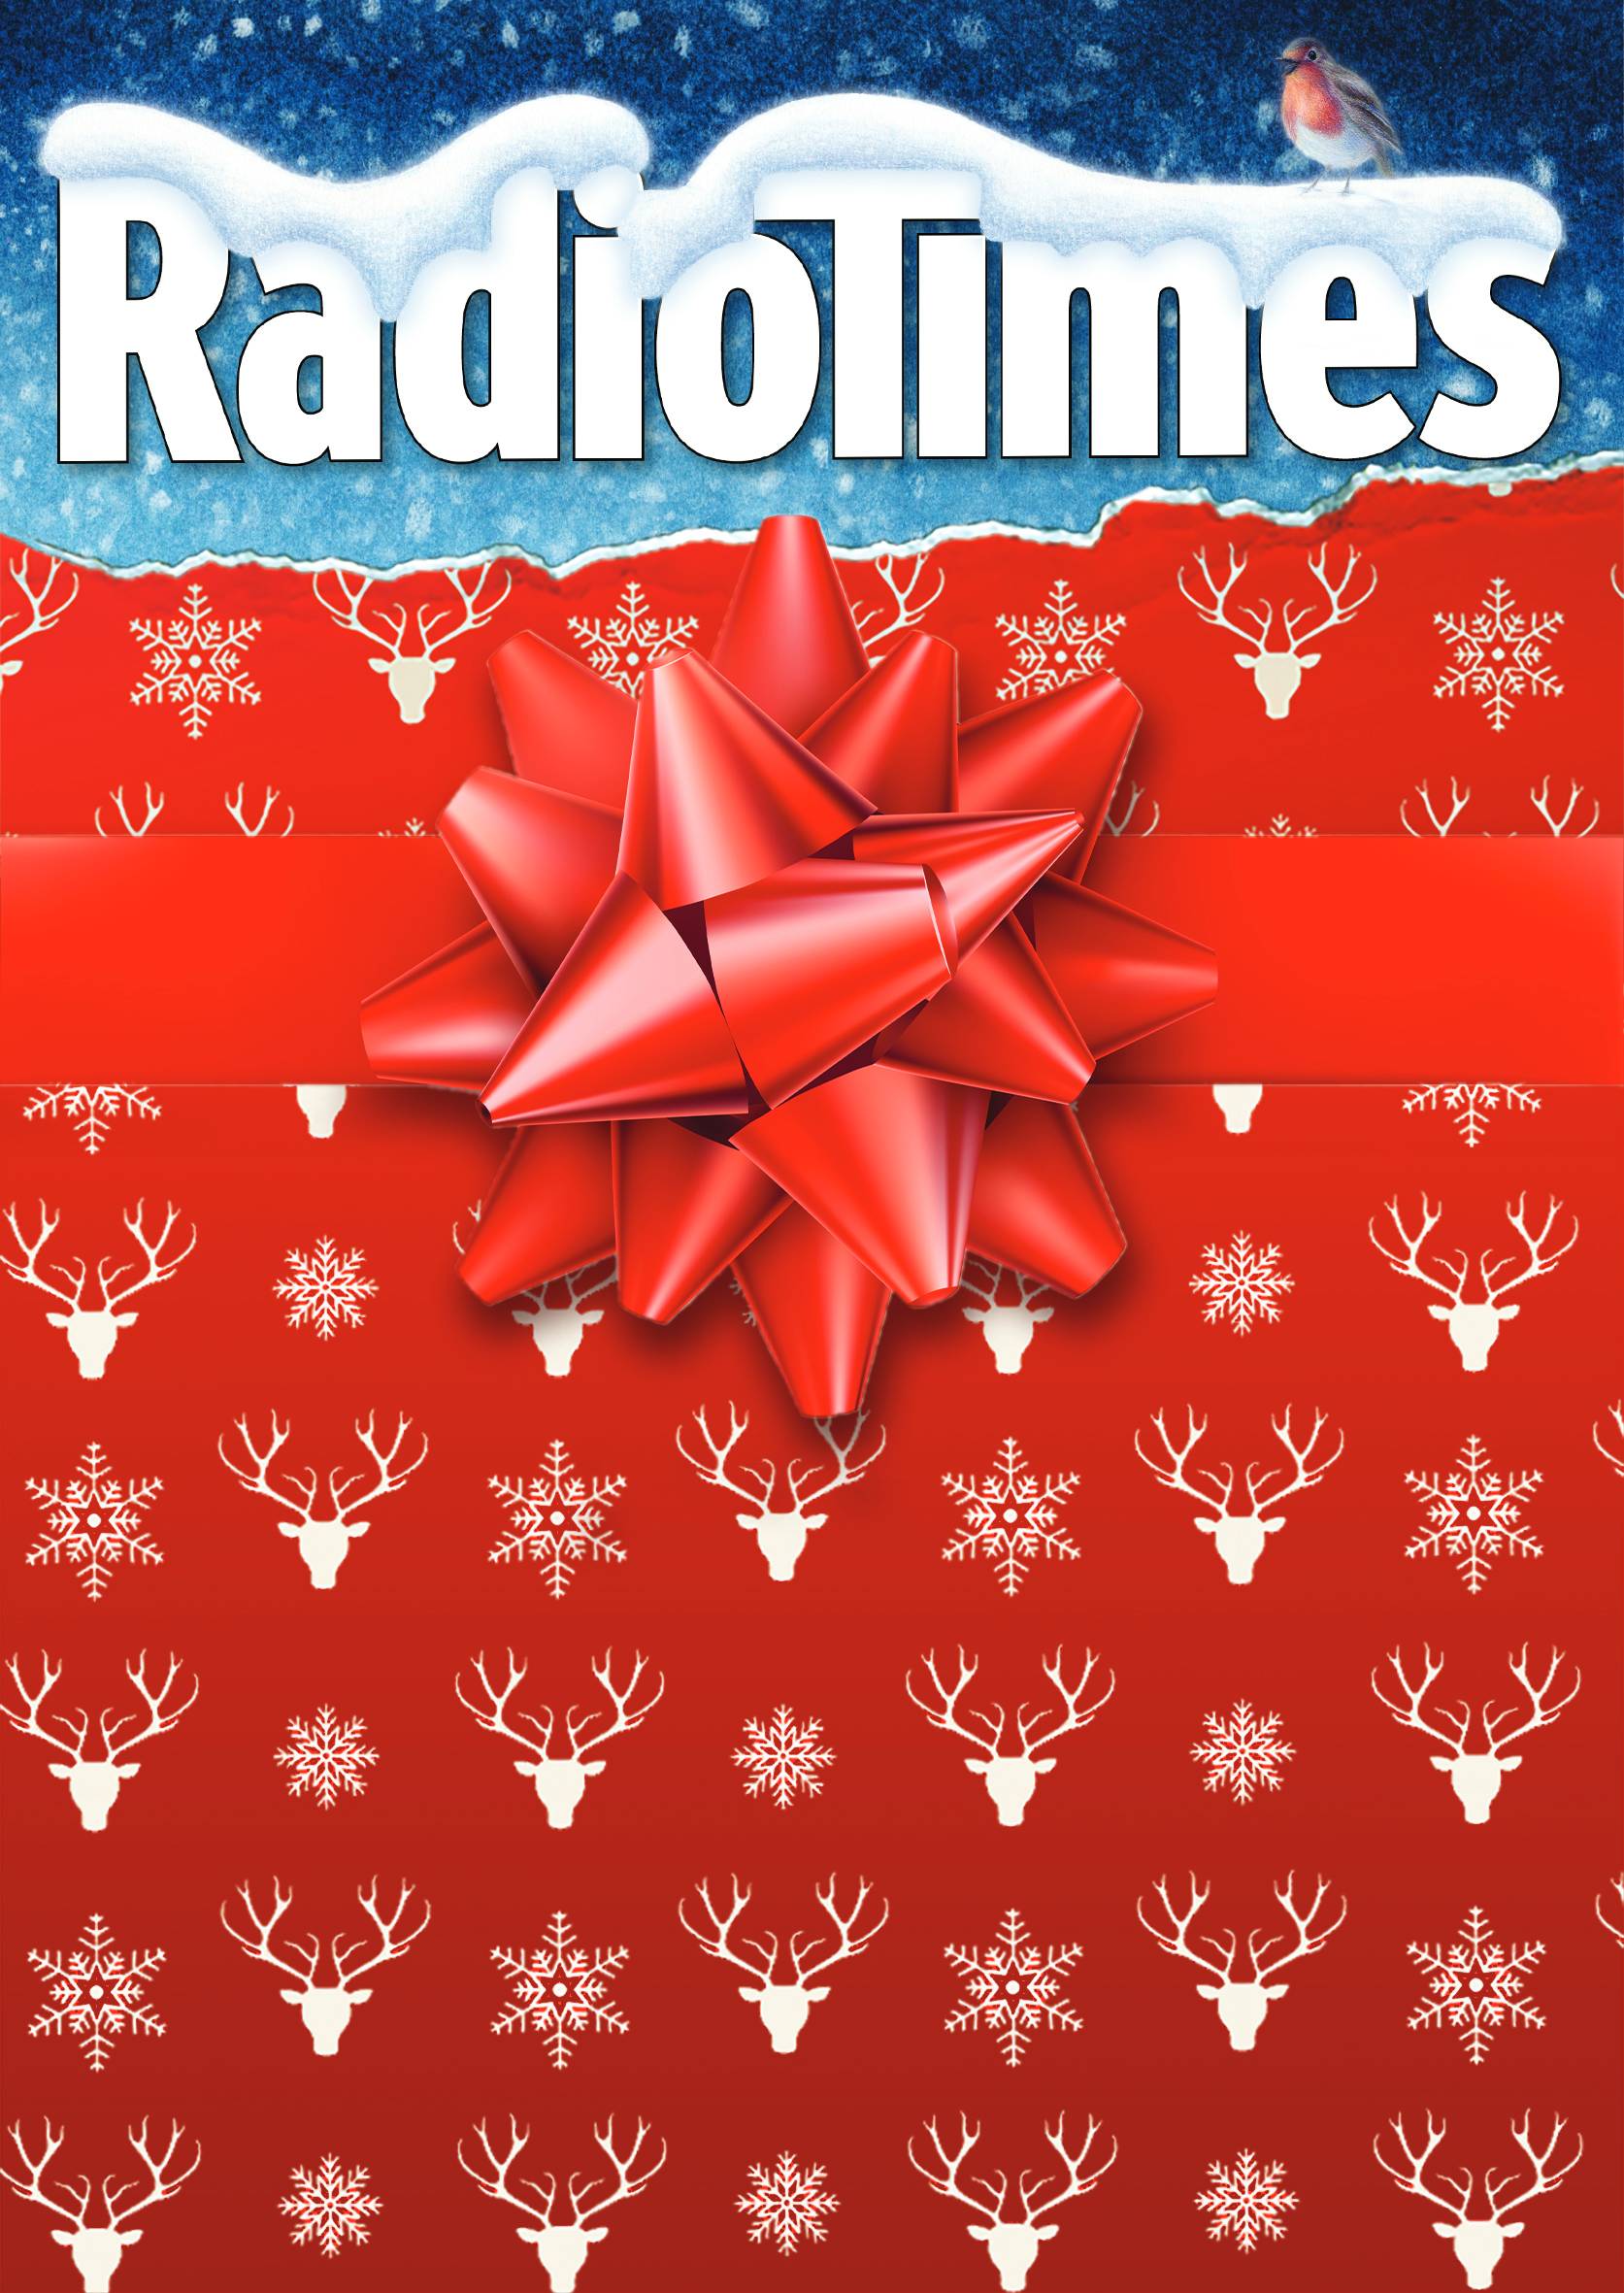 Radio Times Christmas double issue 2021 – London, Anglia and Midland